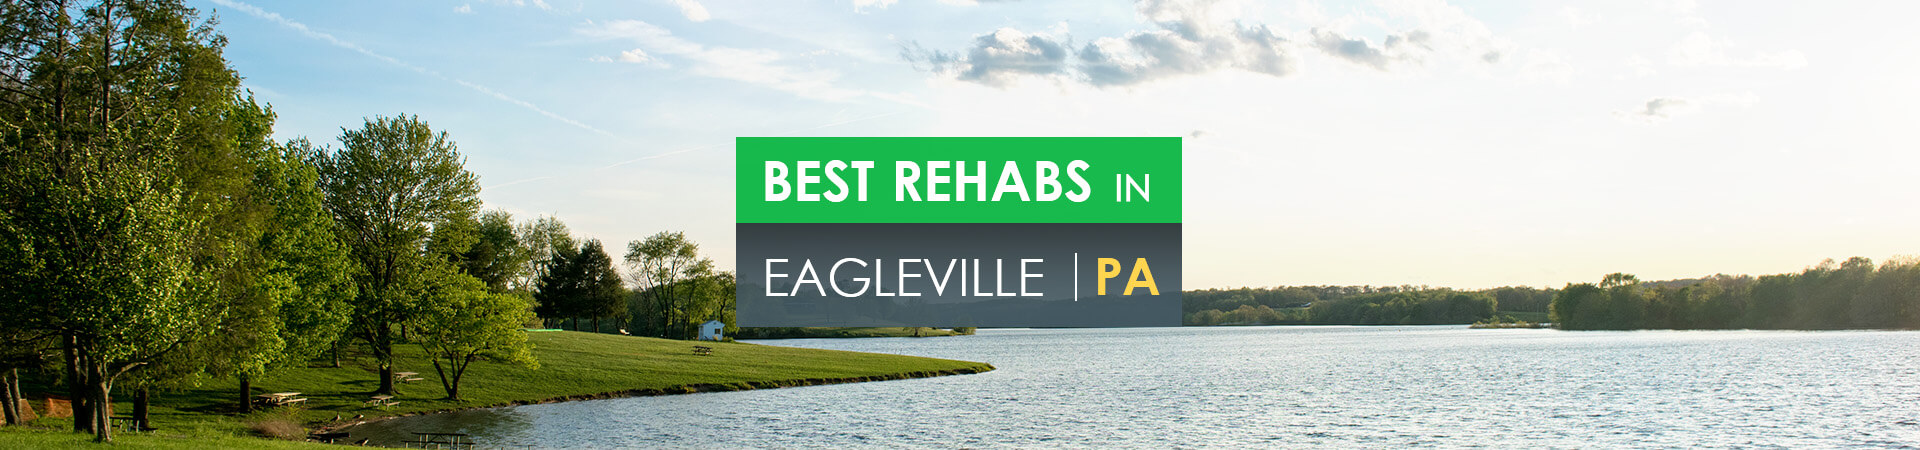 Best rehabs in Eagleville, PA